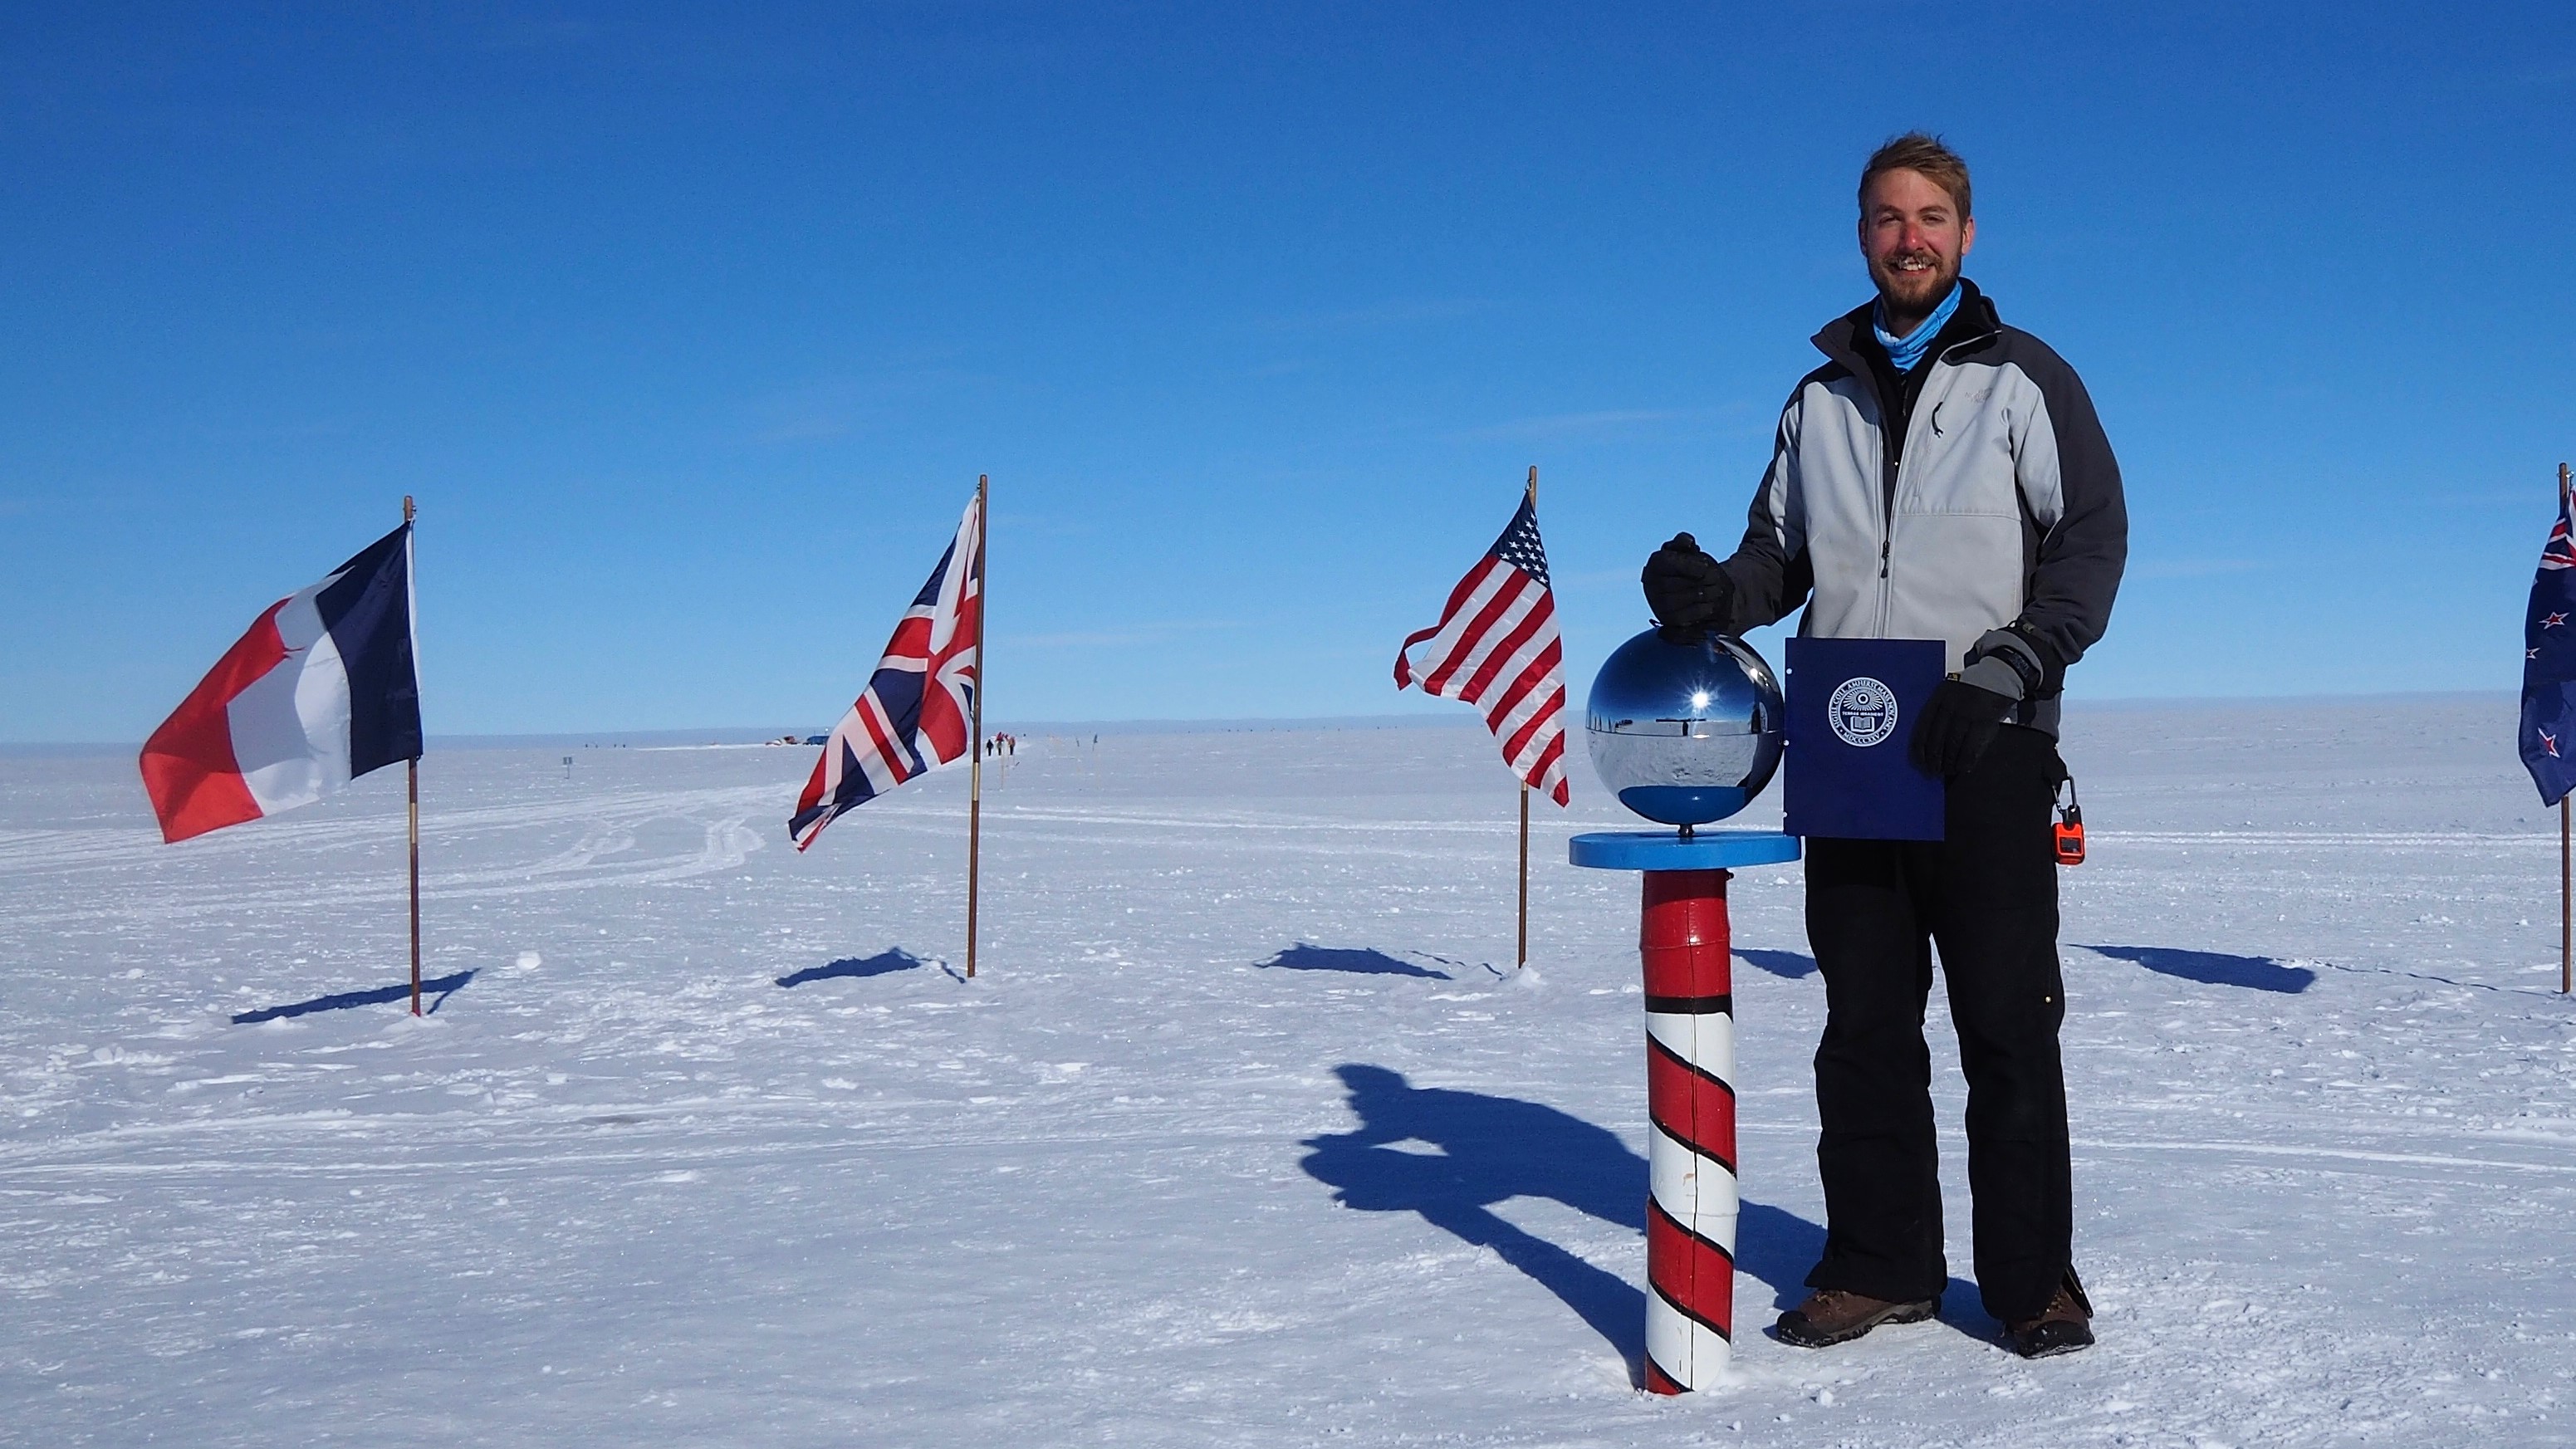 Nick Holschuh Amherst South Pole